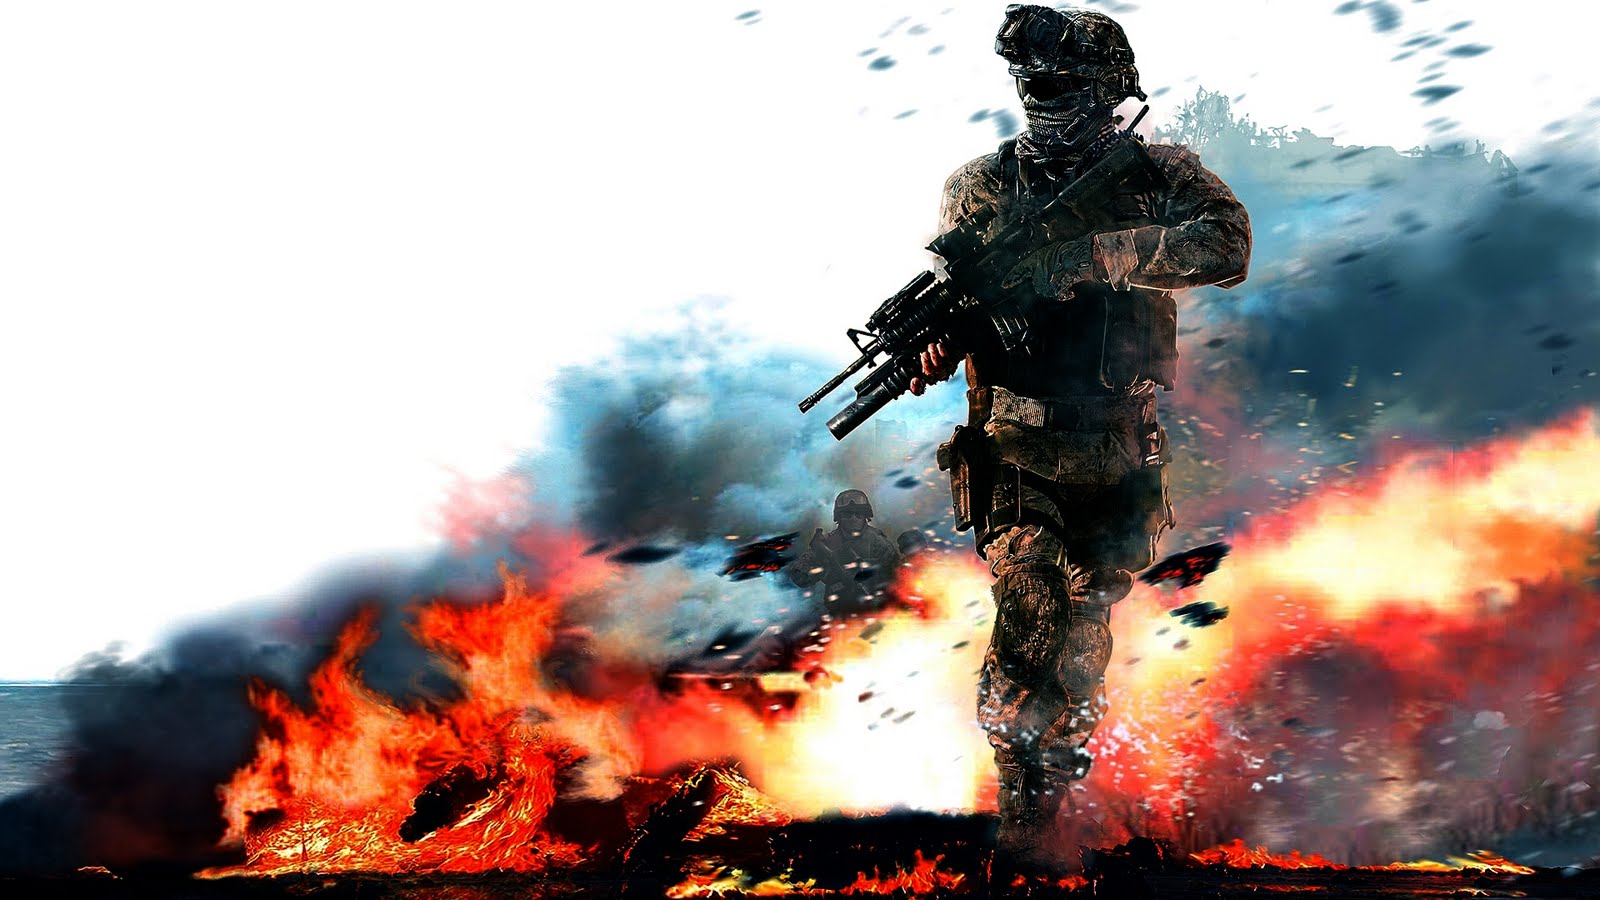 Cyber Game Wallpaper Call Of Duty Modern Warfare 2 Afalchi Free images wallpape [afalchi.blogspot.com]